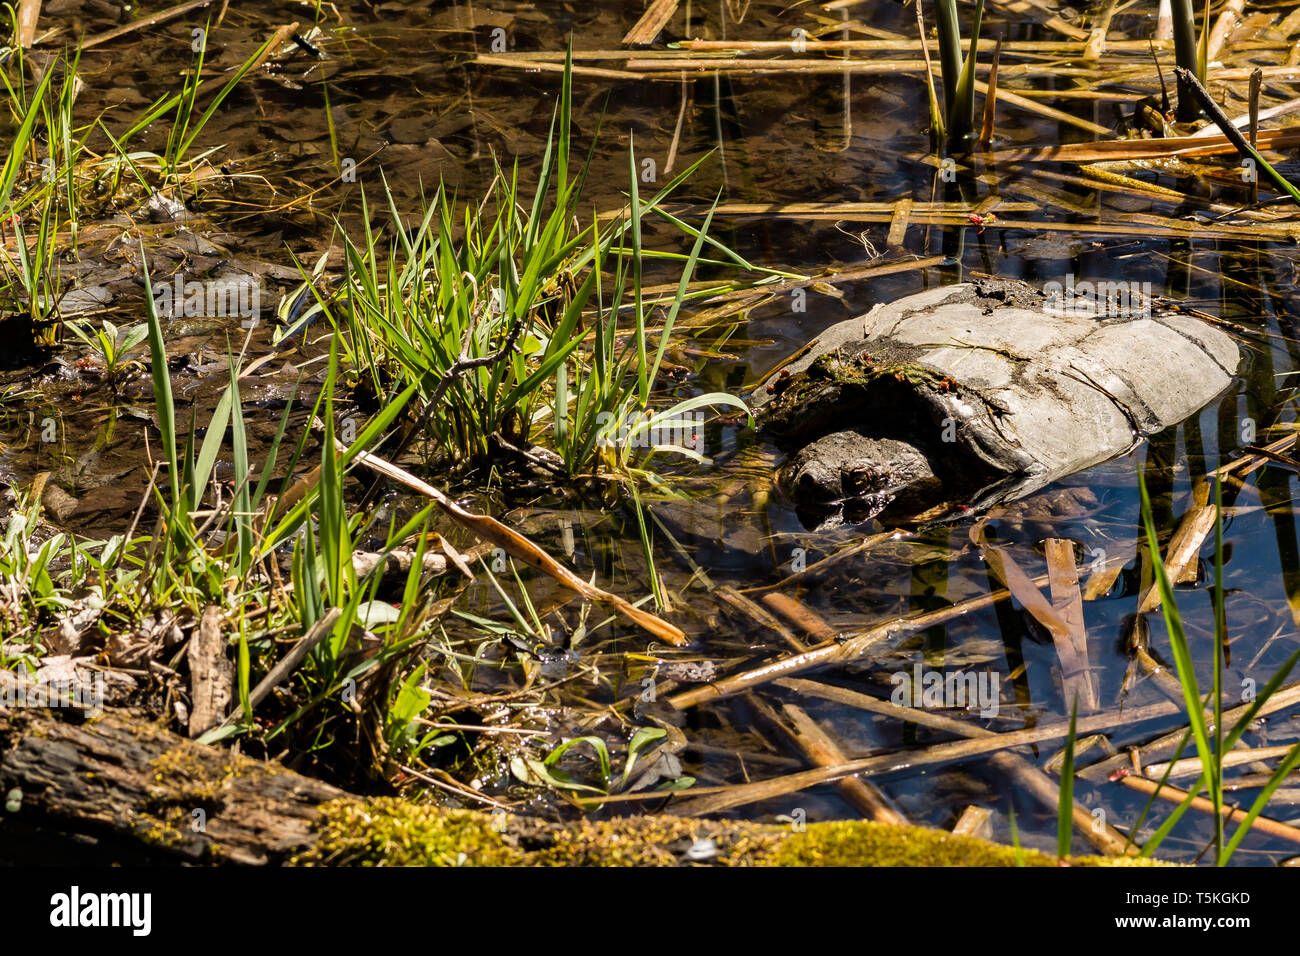 Common Snapping Turtle (Chelydra serpentina) Stock Photo